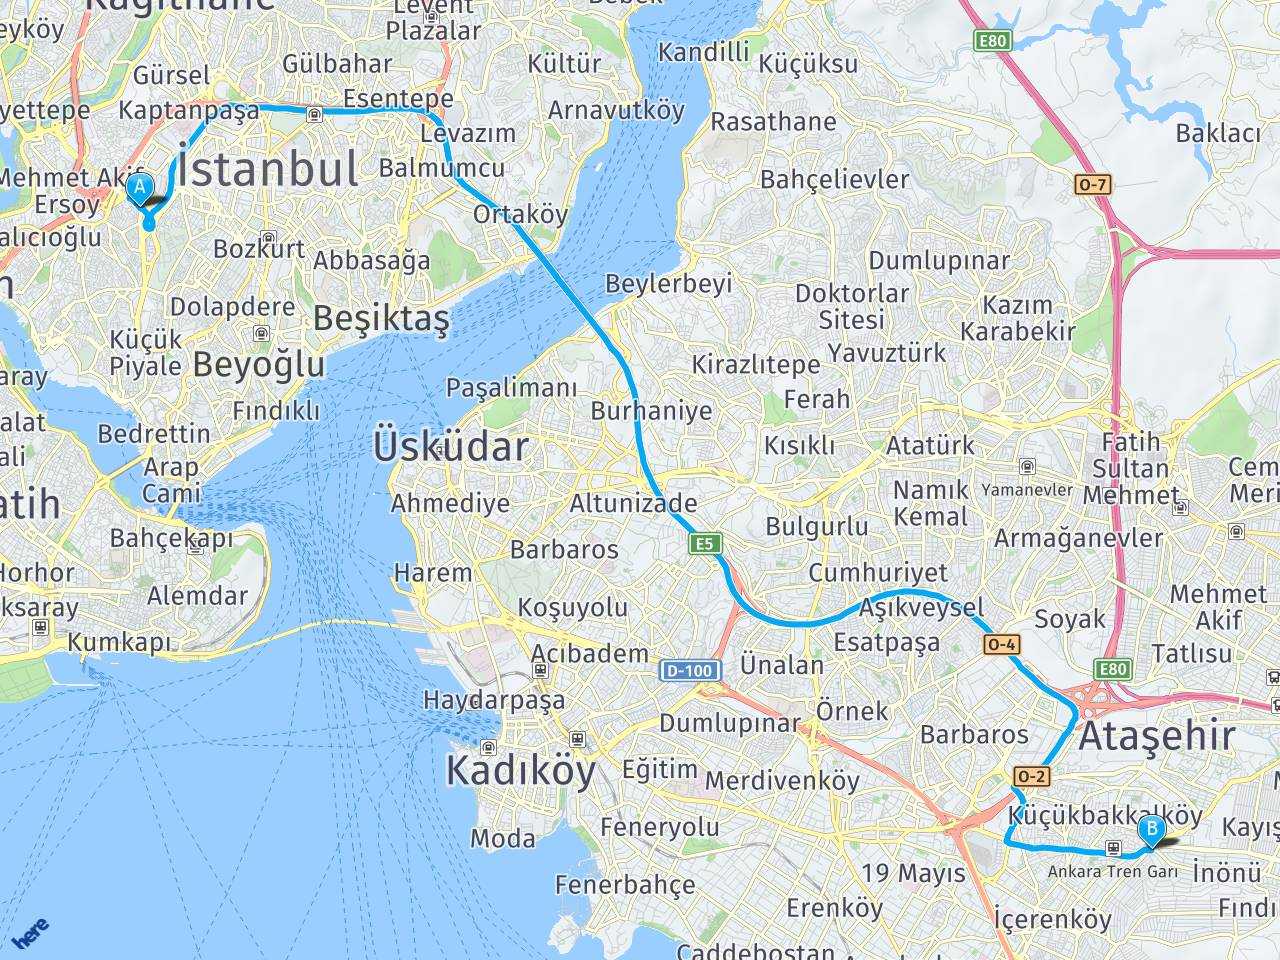 istanbul kasimpasa istanbul kayisdagi arasi mesafe istanbul kasimpasa istanbul kayisdagi yol haritasi istanbul kasimpasa istanbul kayisdagi kac saat kac km